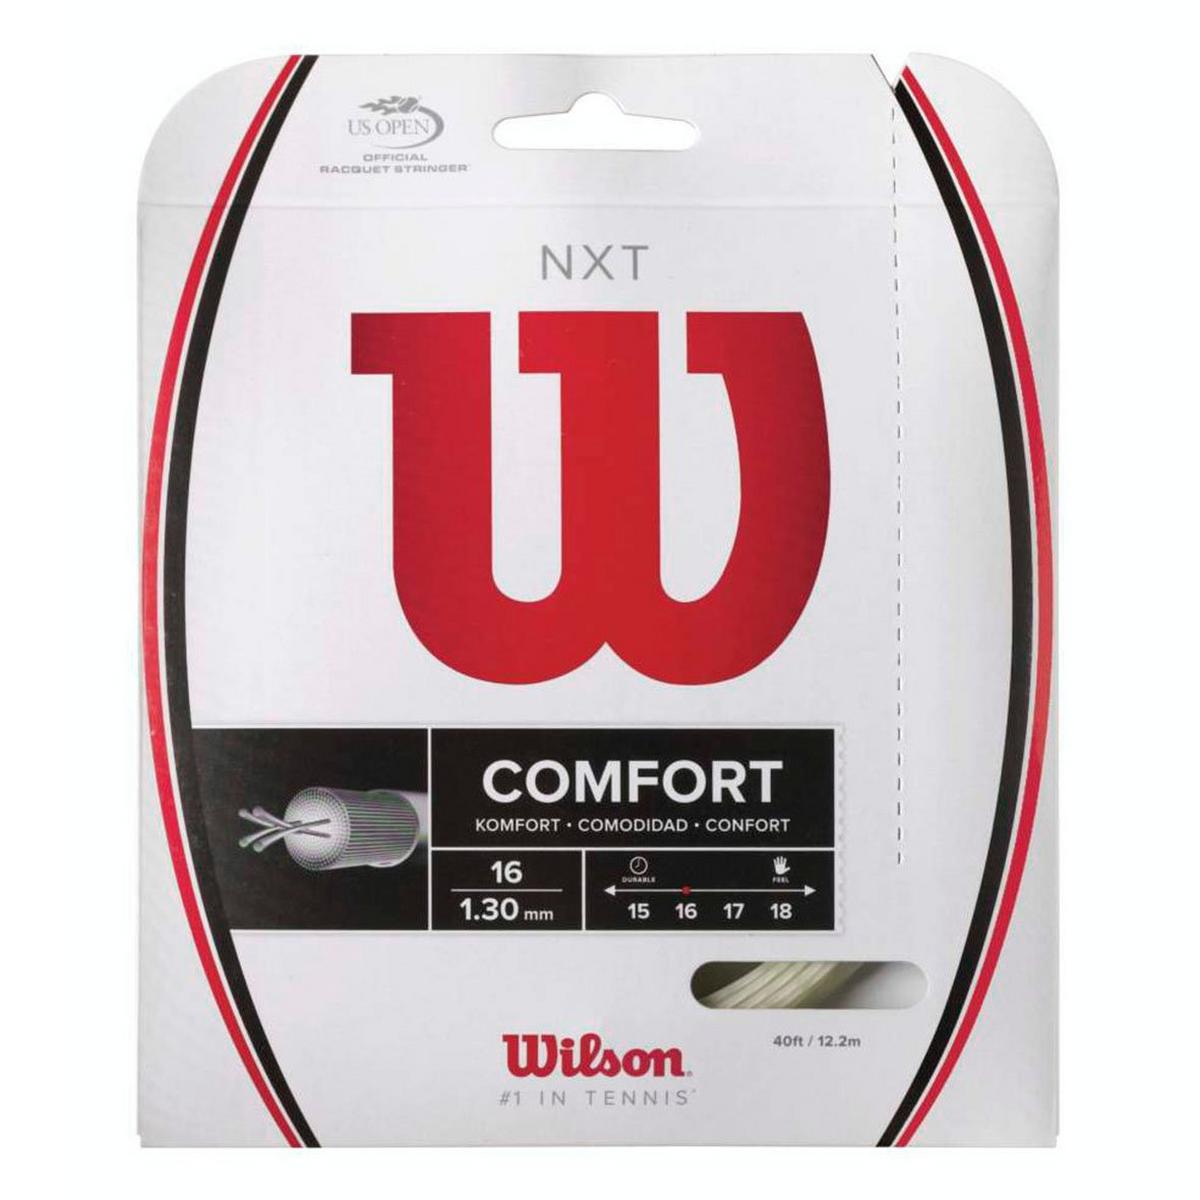 NXT 17G Comfort Tennis String